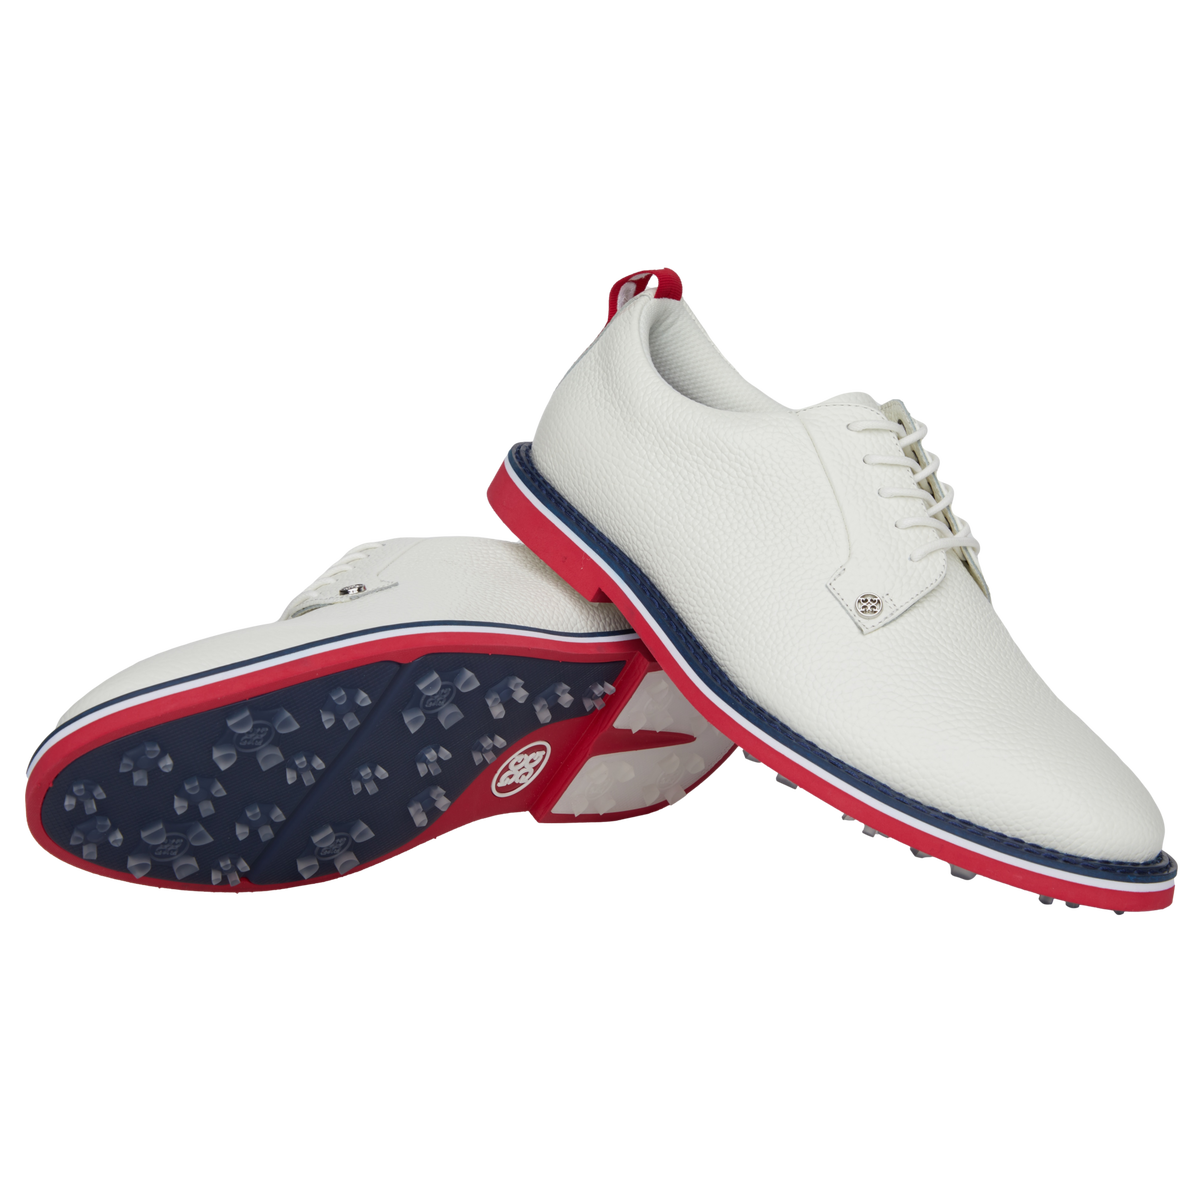 Barstool Sports 지포어 G/FORE x Barstool Golf Gallivanter Two Tone Mens Golf Shoe,Red/White/Blue